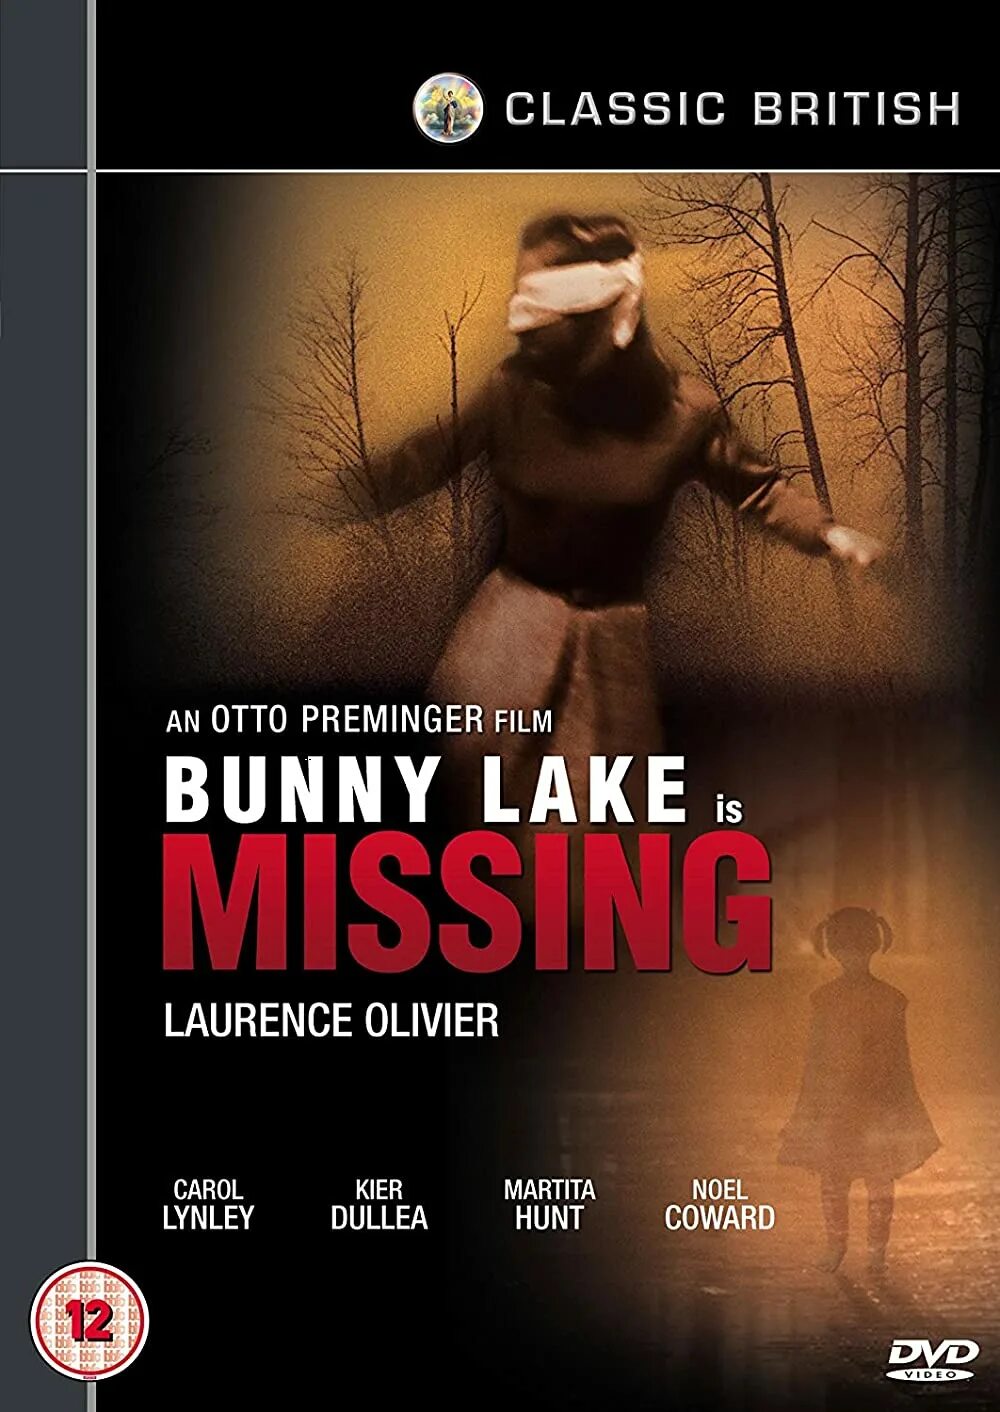 Bunny Lake is missing (1965). Исчезнувшая Банни Лейк. Исчезновение Банни Лейк книга. Bunny lake